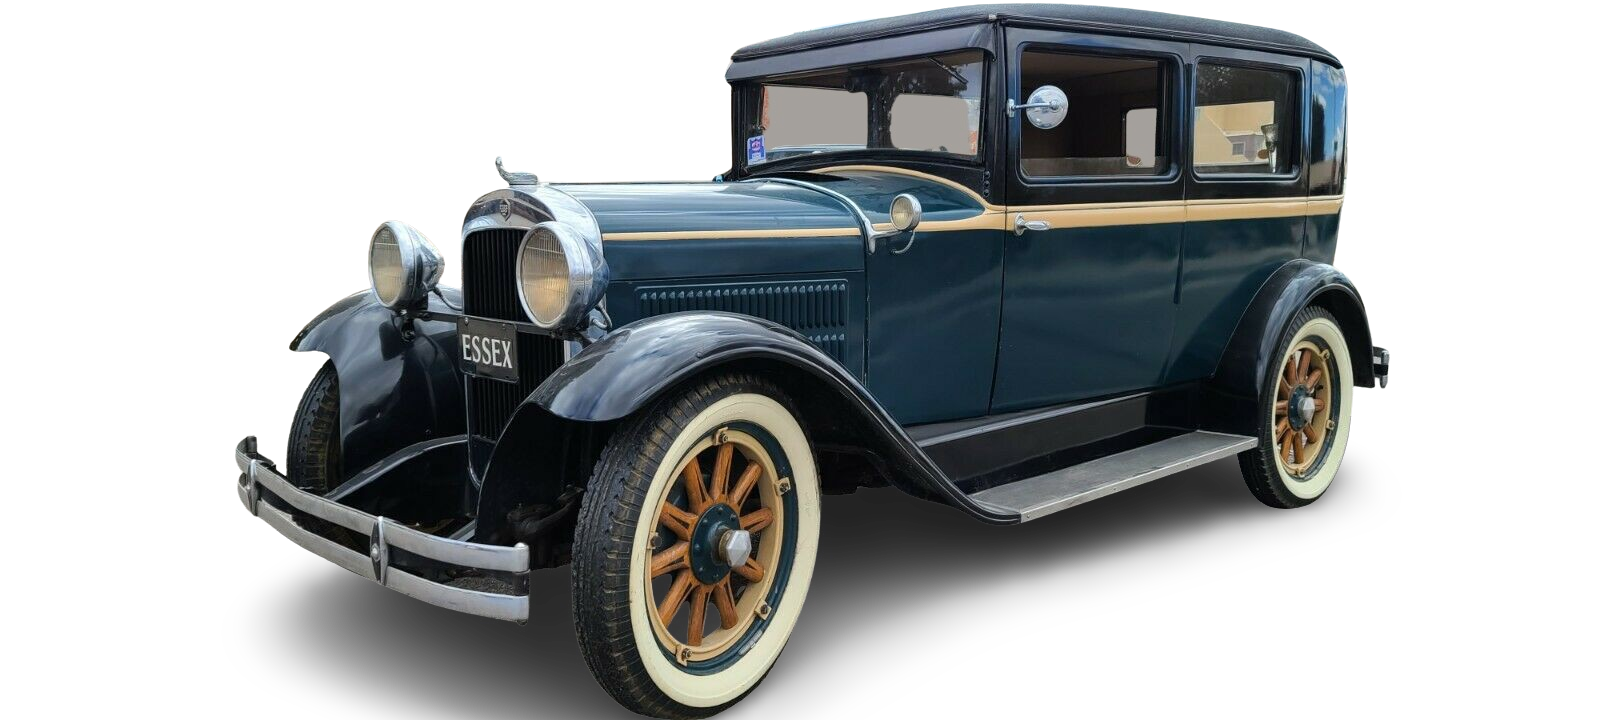 1929 Essex Super Six | Vintage Car Collector